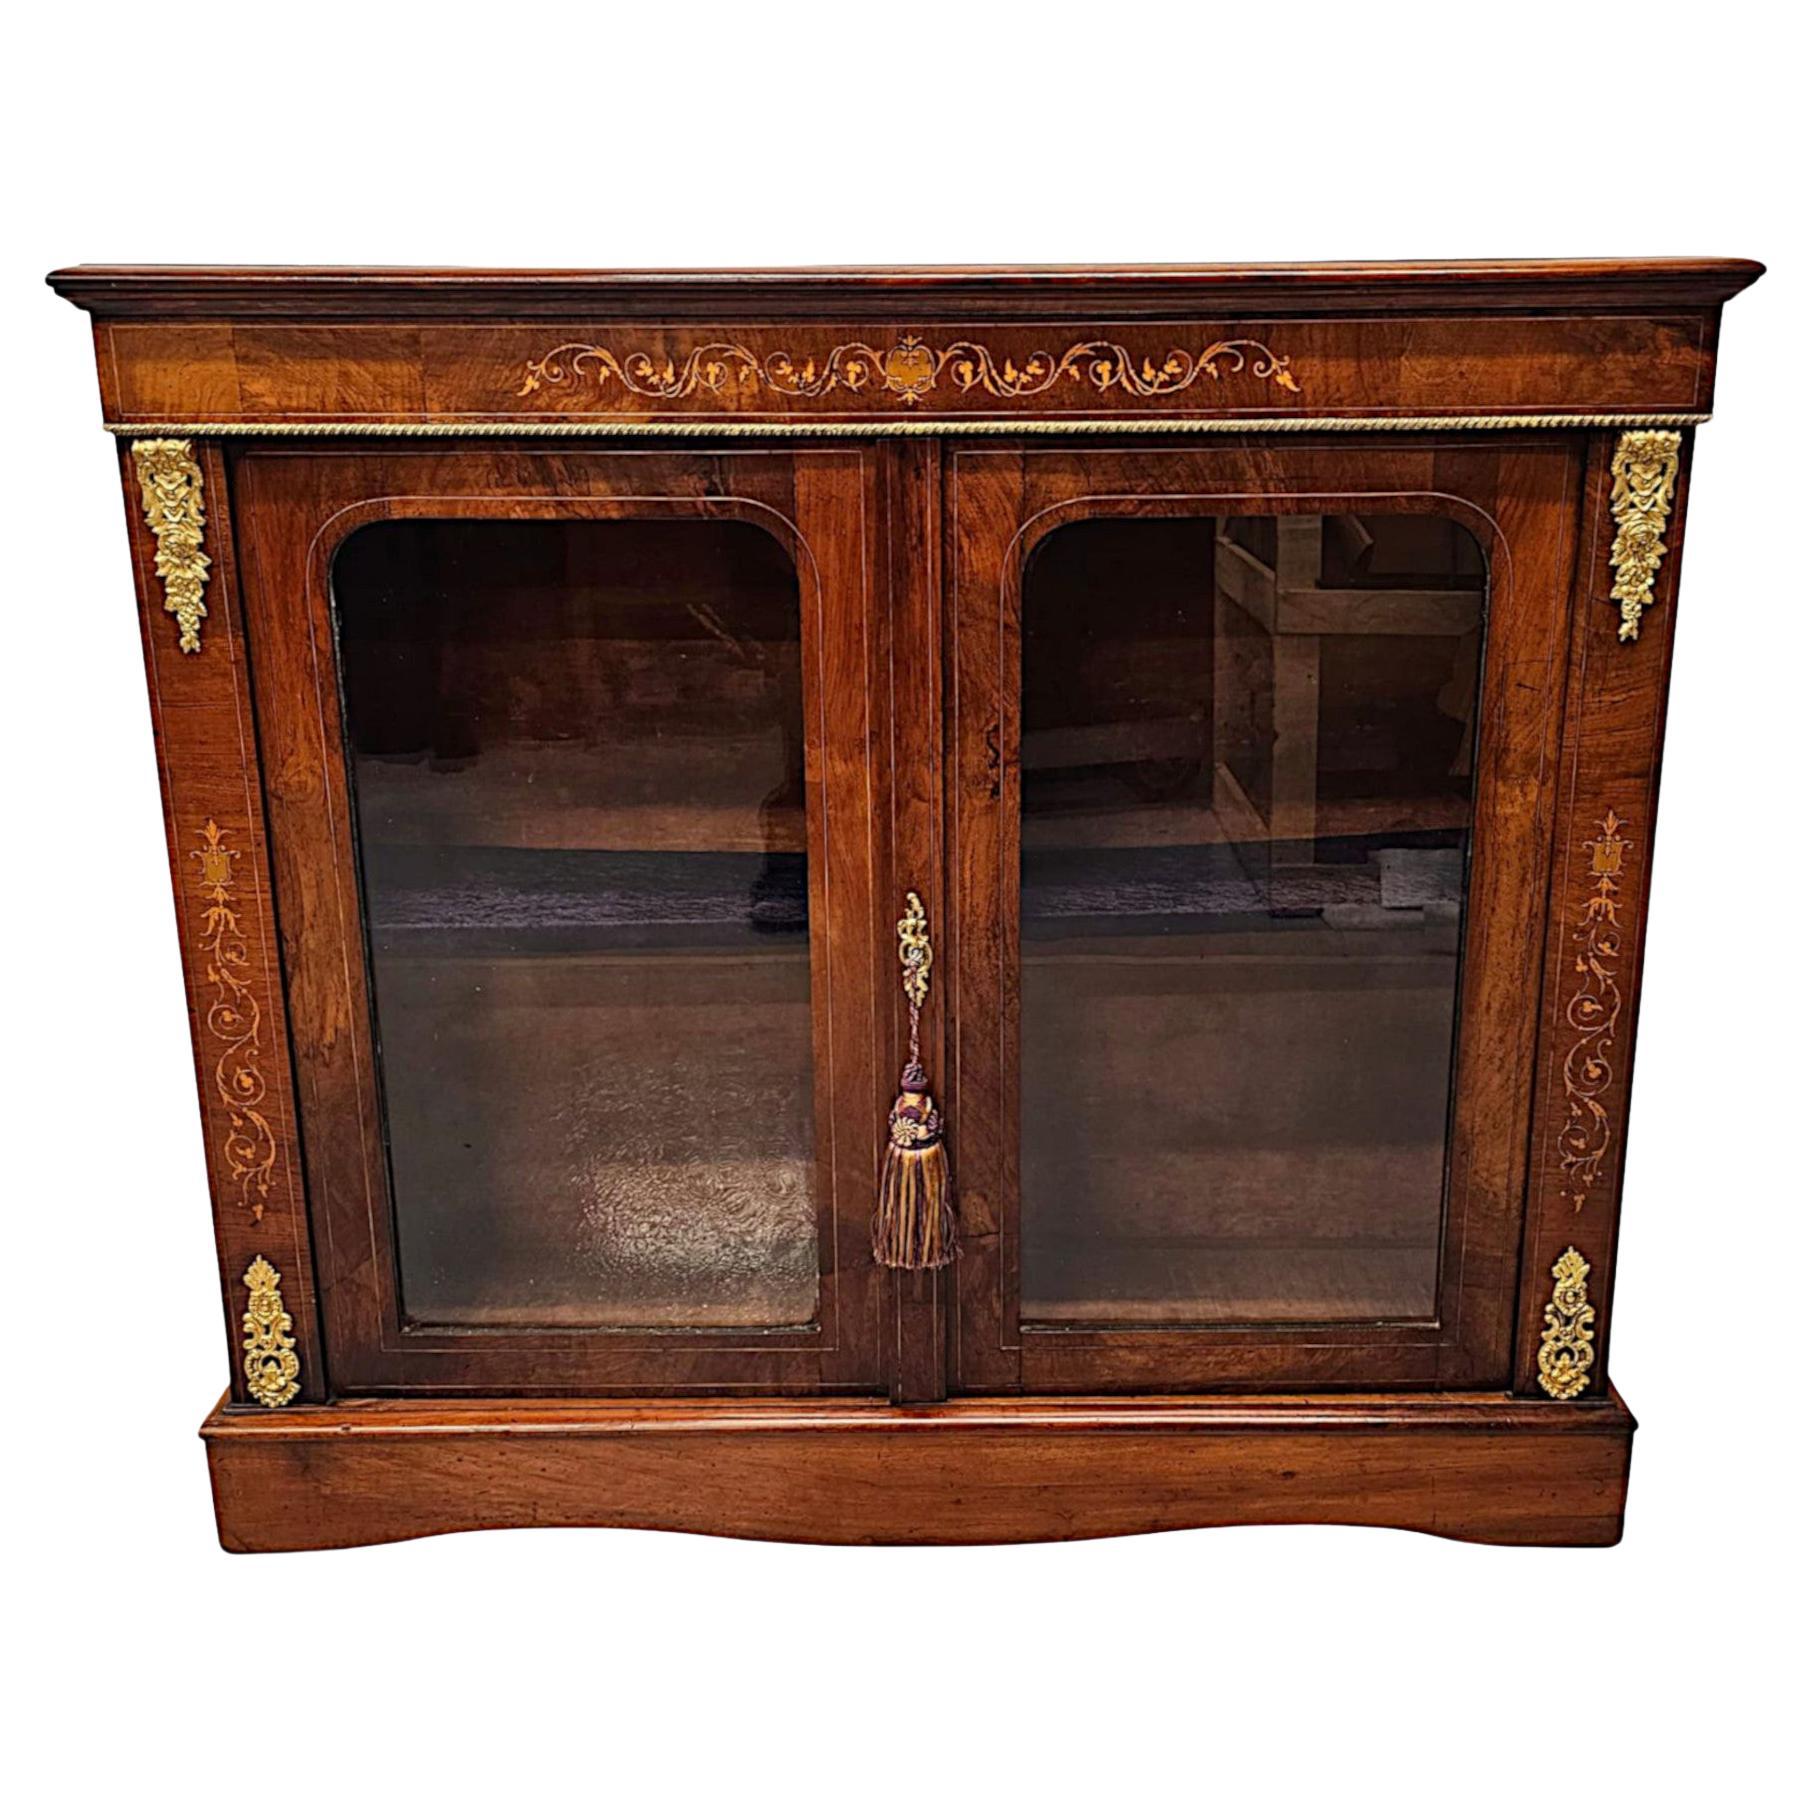 A Fabulous 19th Century Ormolu Mounted Burr Walnut Two Door Cabinet